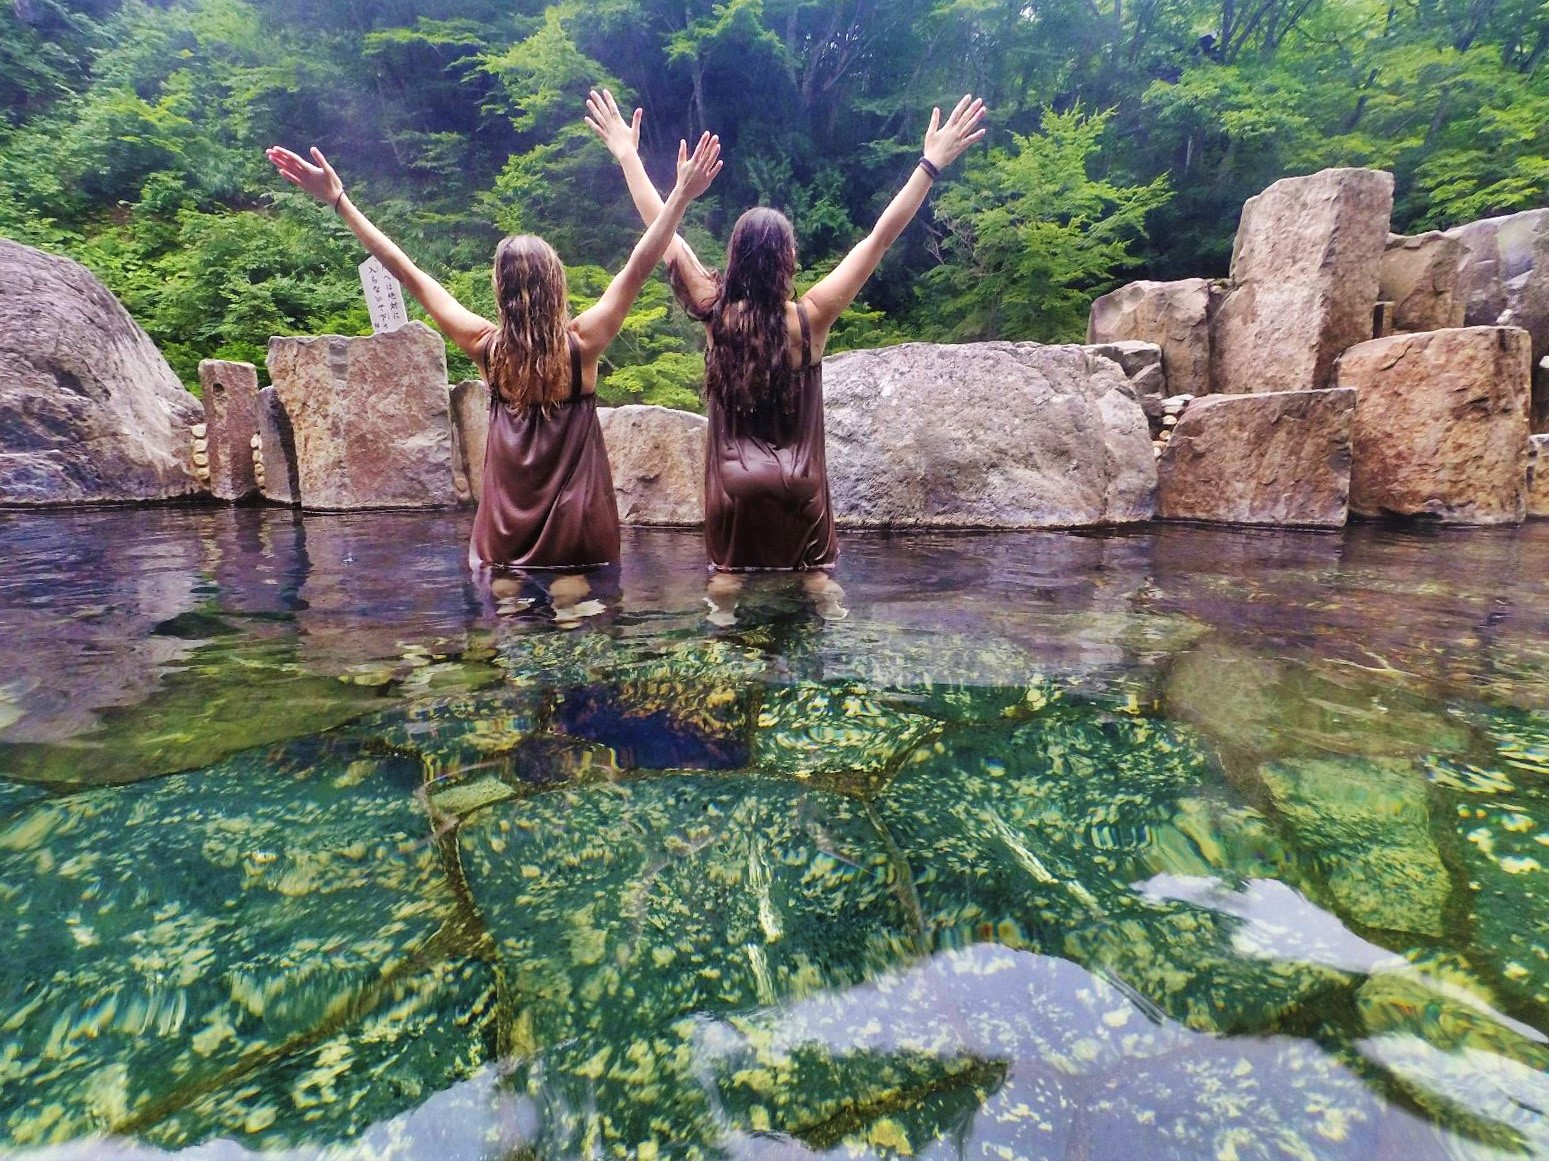 Tattoo Friendly Onsen! 100 Hot Springs In Beppu, Japan - Enjoy Onsen